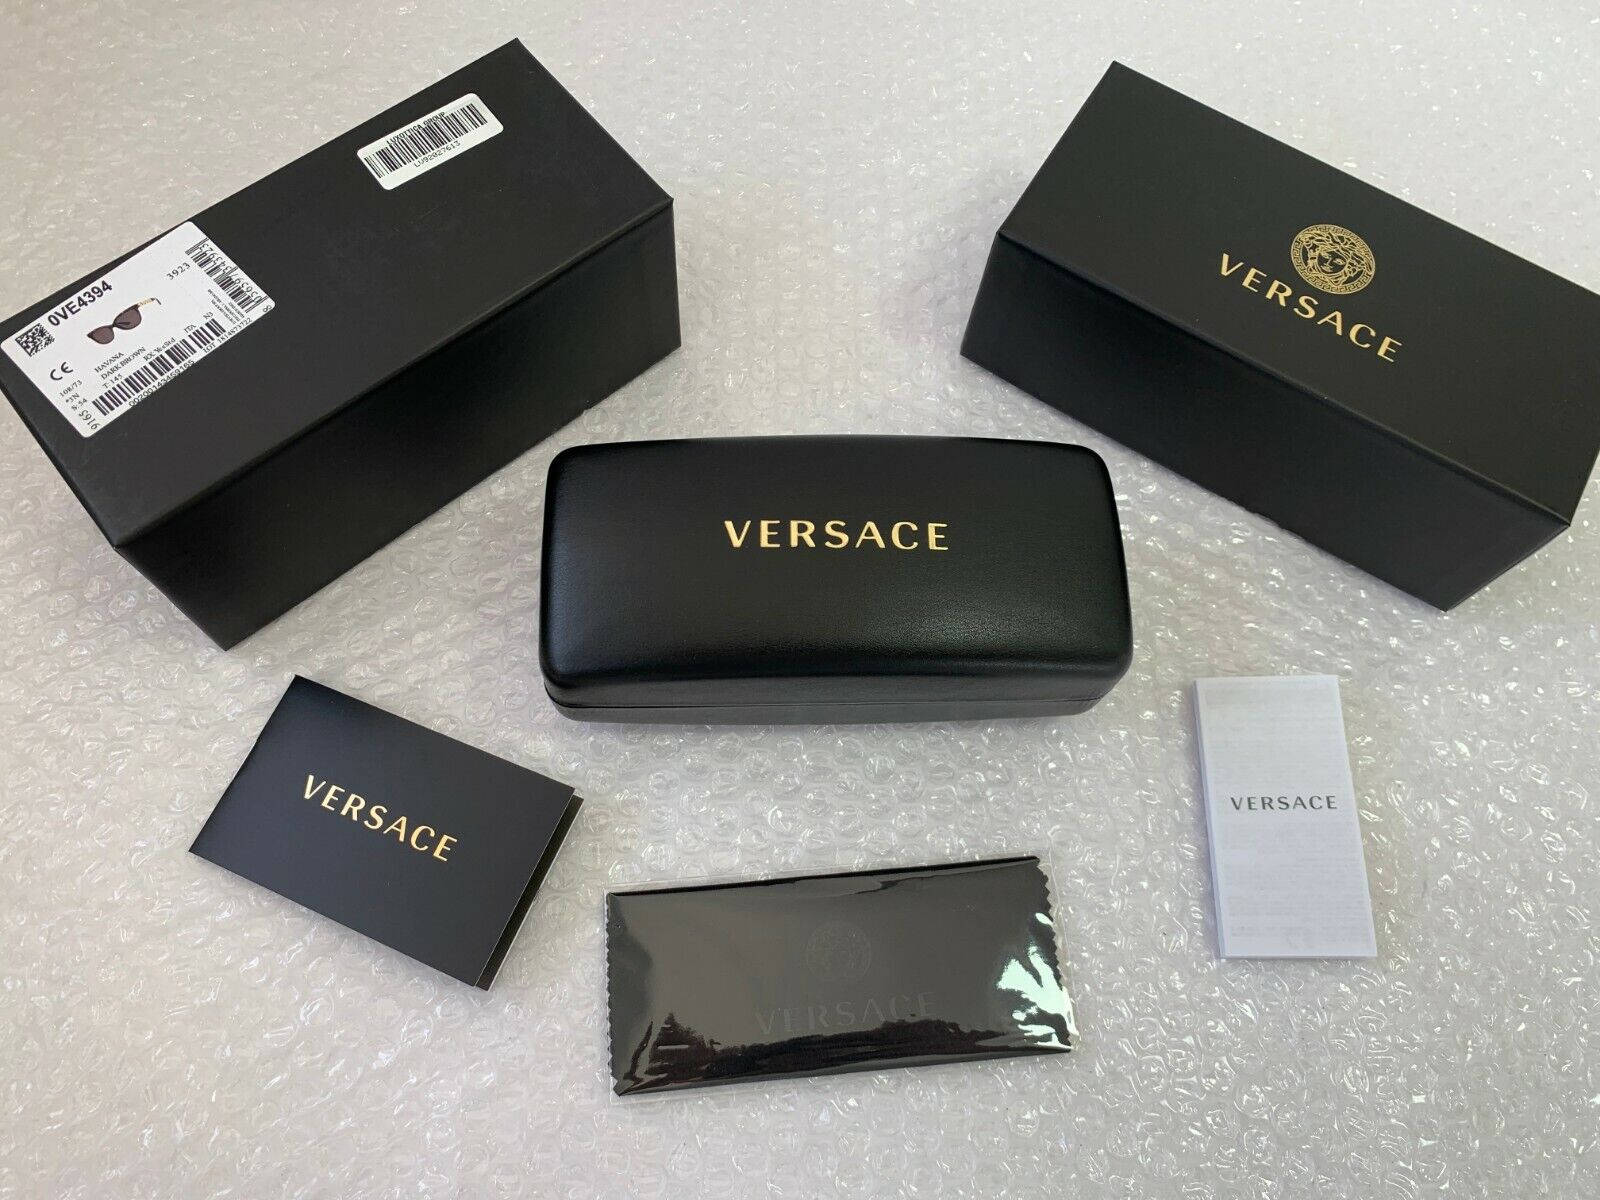 Download Versace Glasses Hard Cases Wallpaper | Wallpapers.com